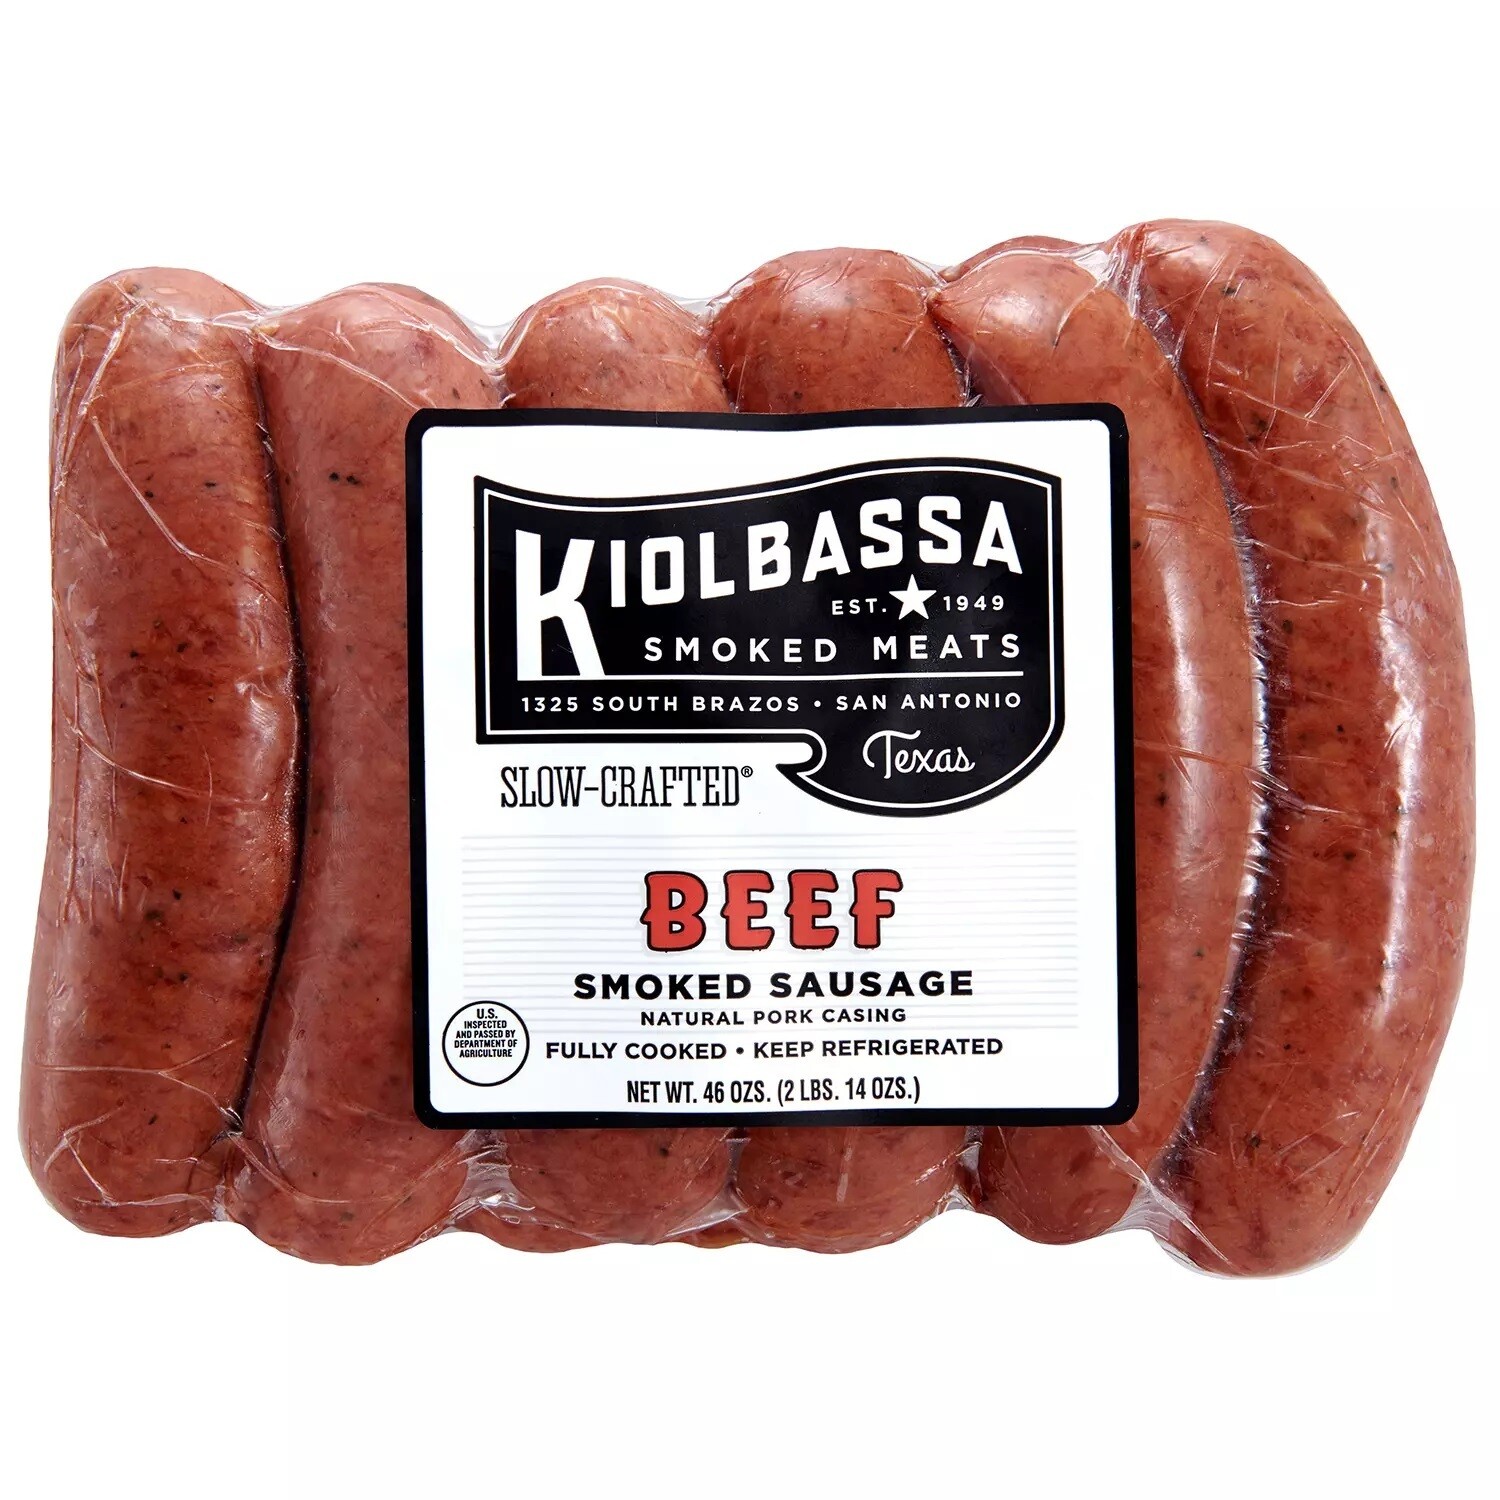 Kiolbassa Beef Smoked Sausage 11ct